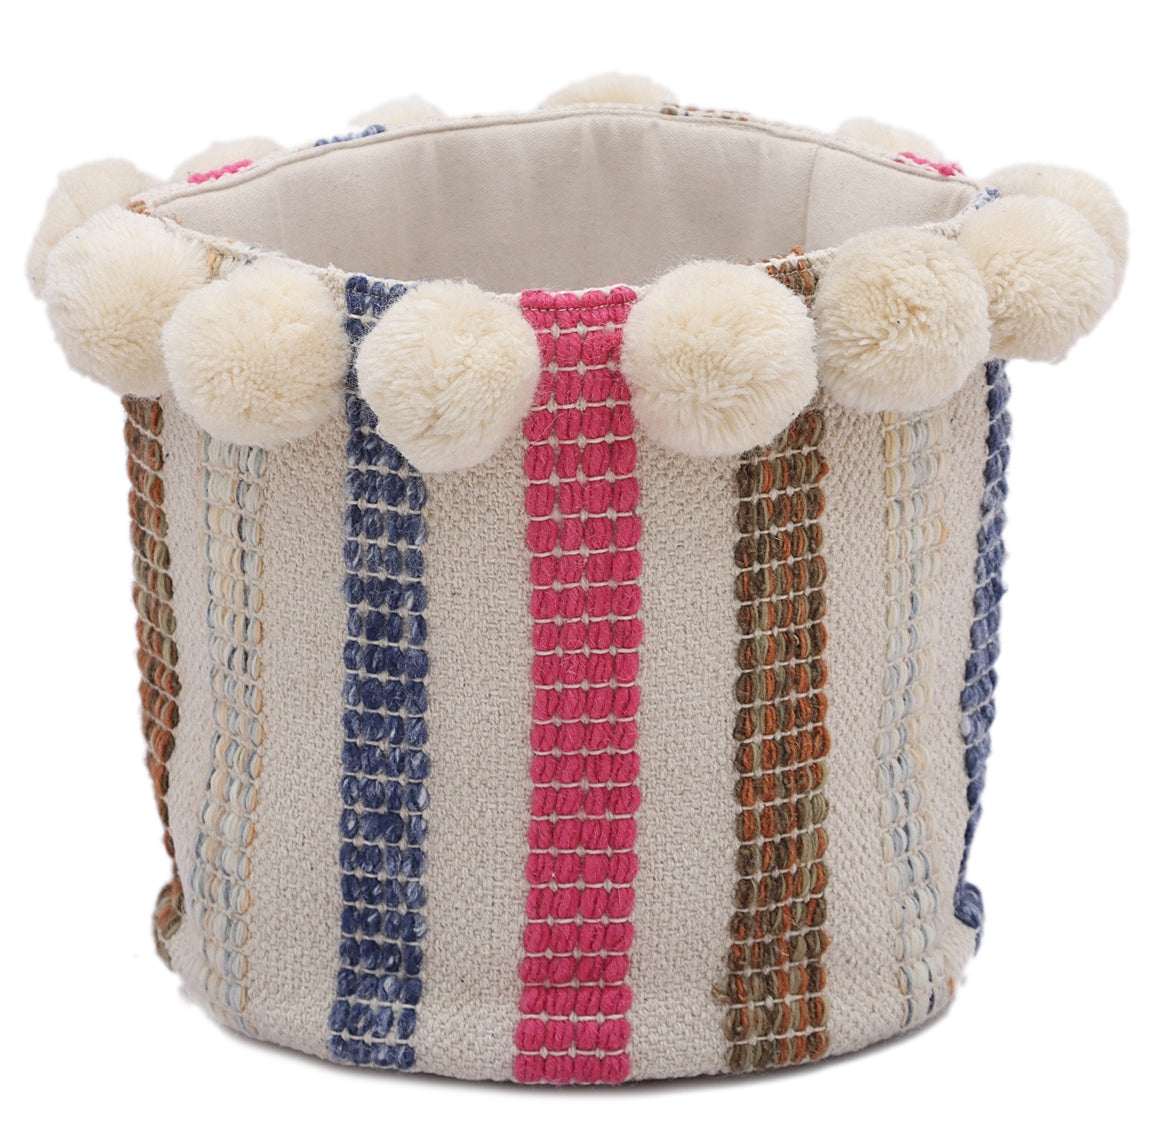 Multi Color Hand Woven Basket